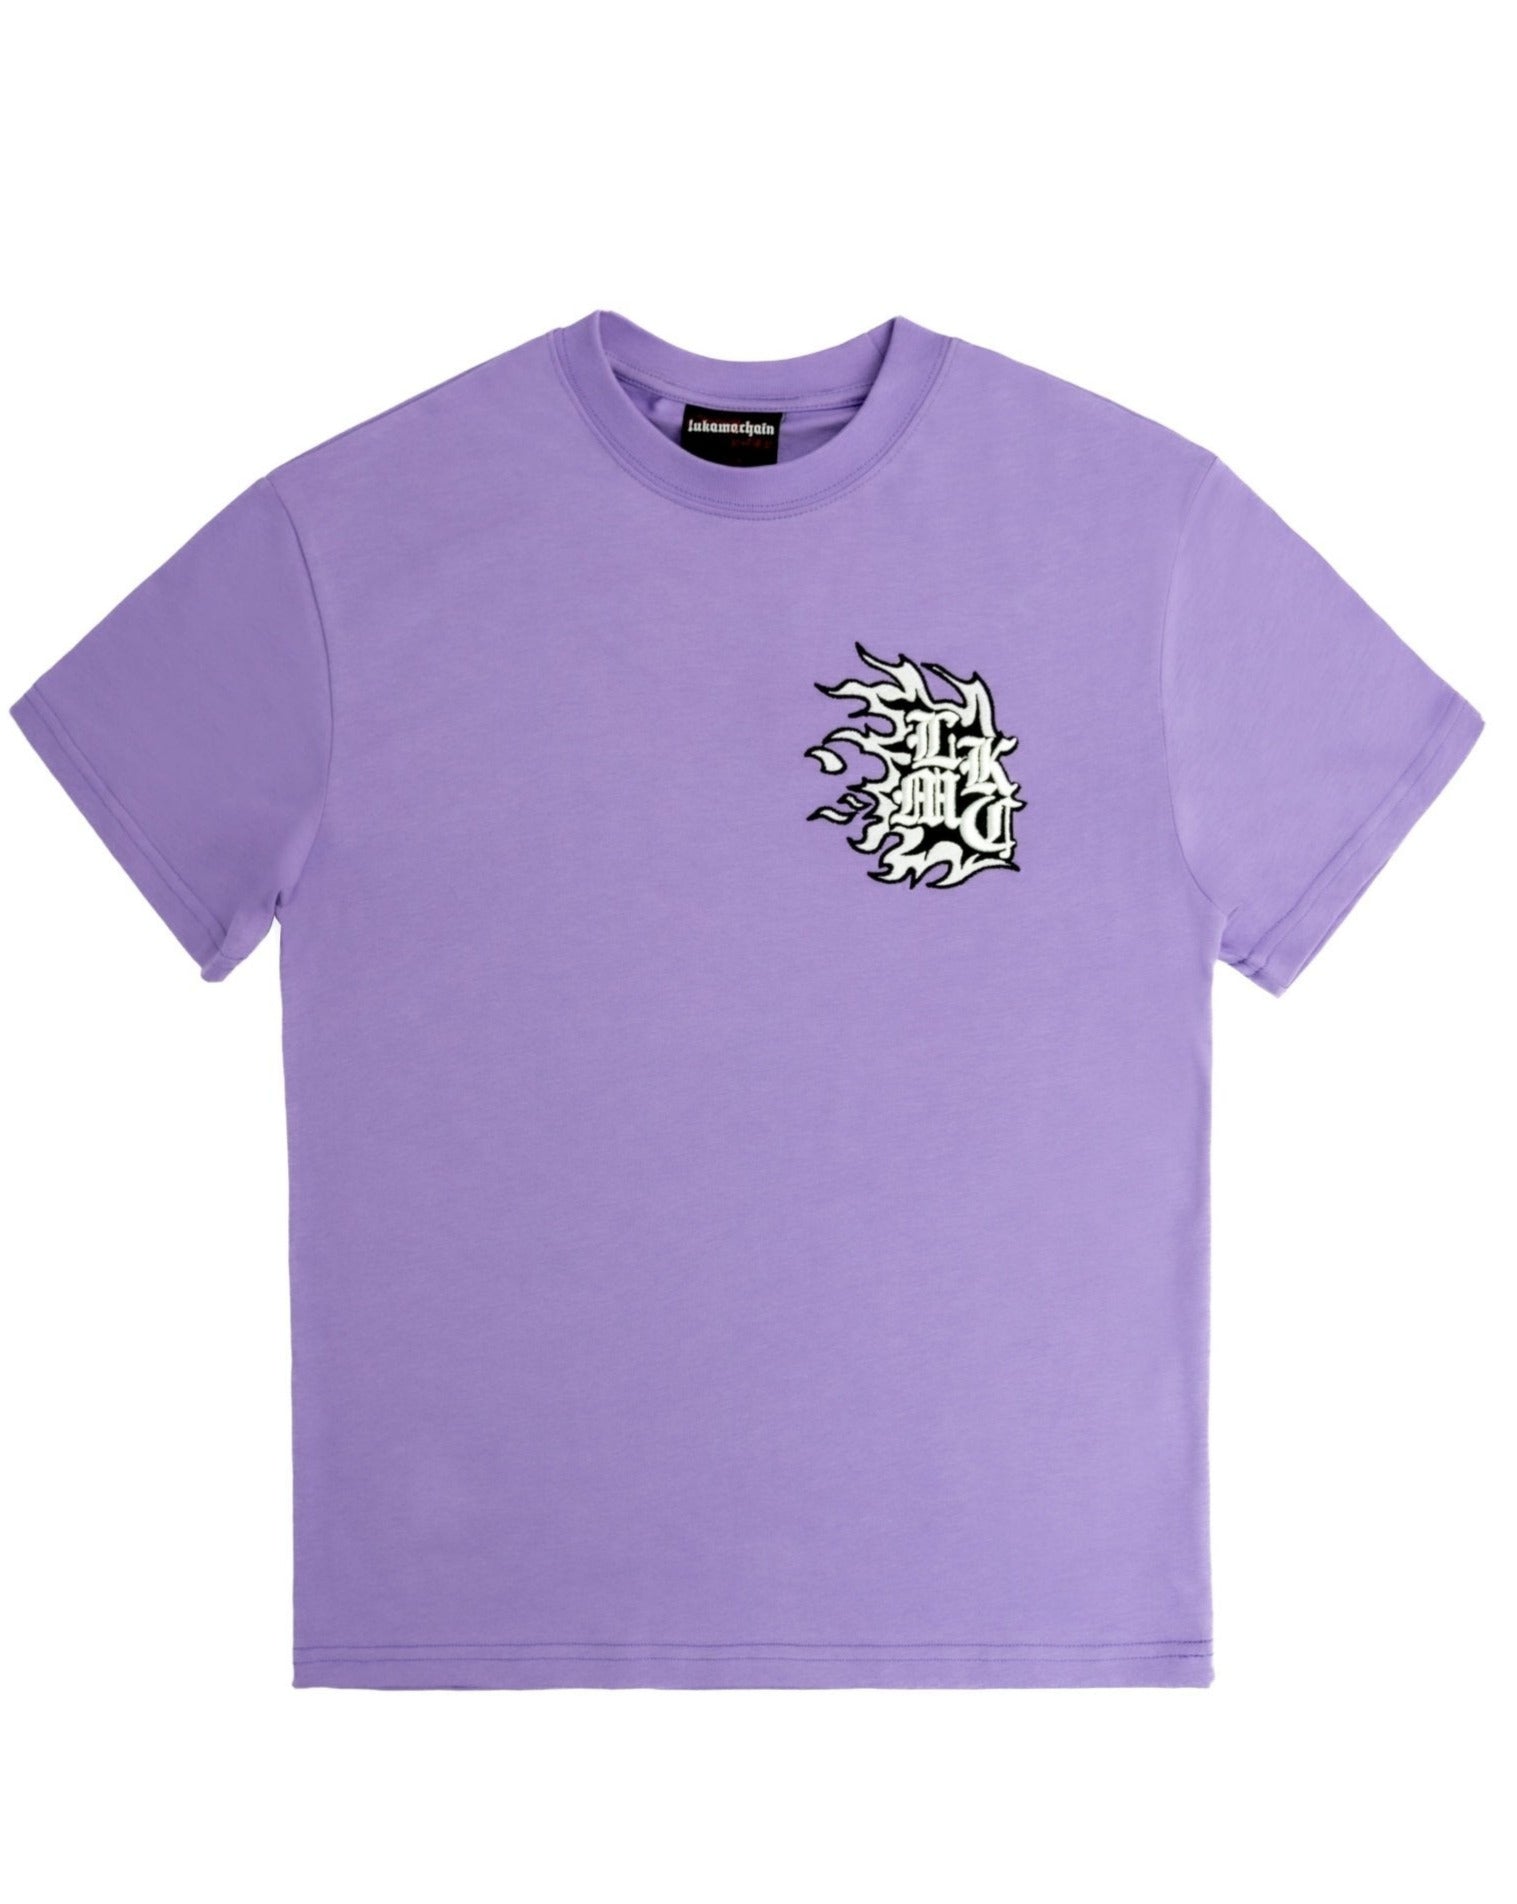 SS23 T-Shirt Purple - lukamachain